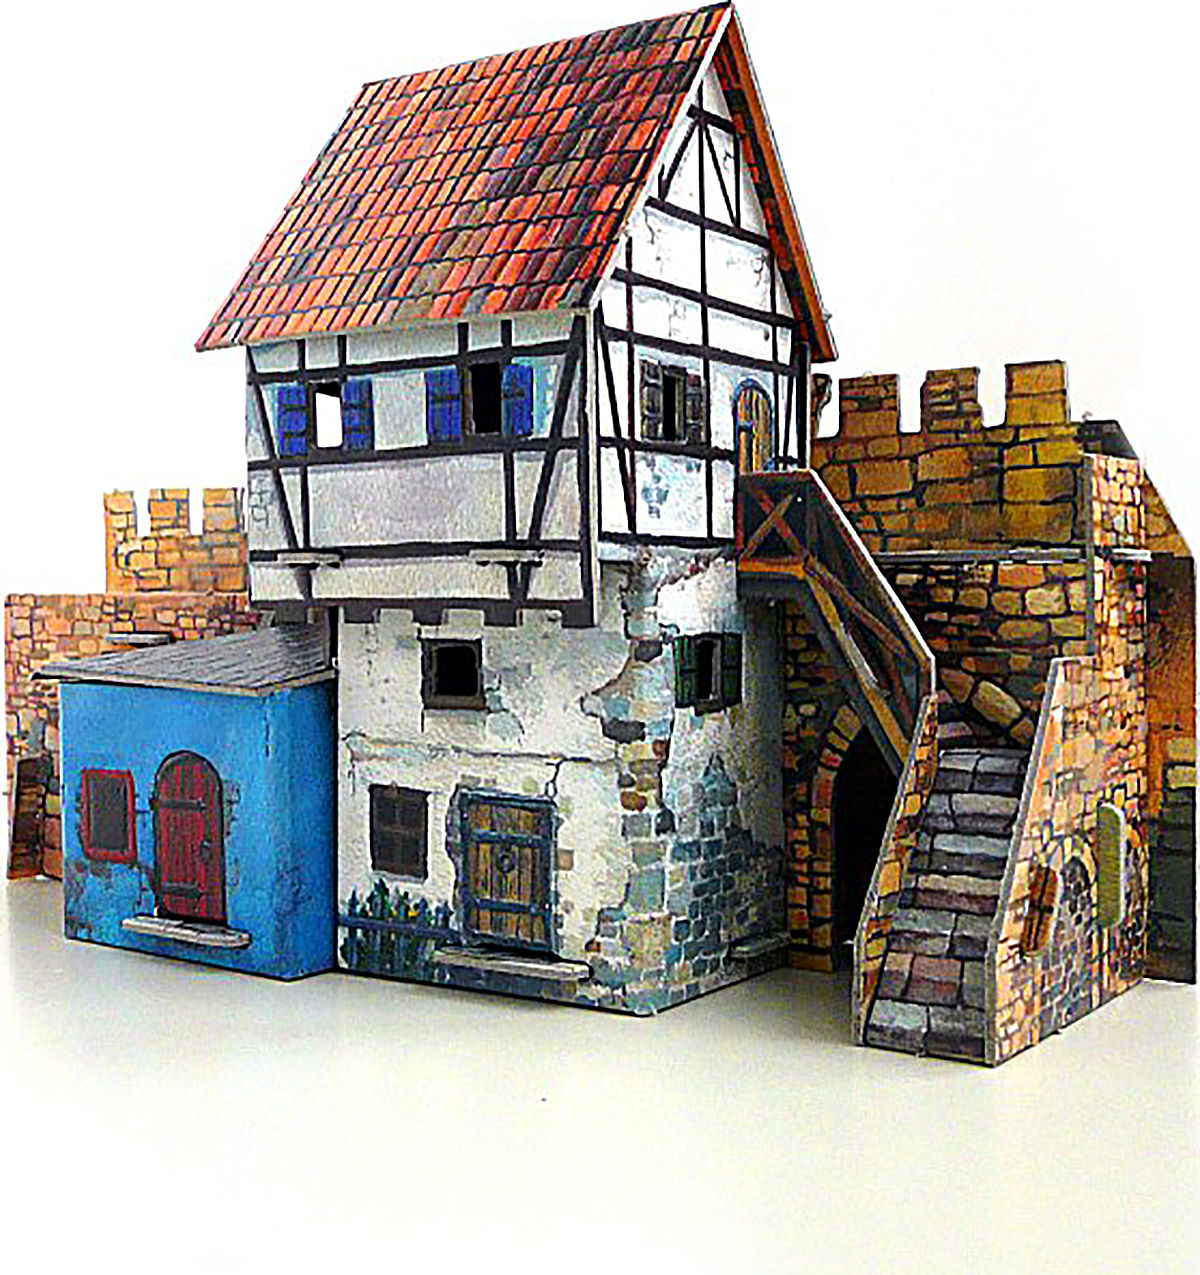 3d Puzzle KARTONMODELLBAU Papier Modell Geschenk Idee Spielzeug 250 HAUS NAHE DER MAUER HOUSE NEAR THE WALL clever paper umbum